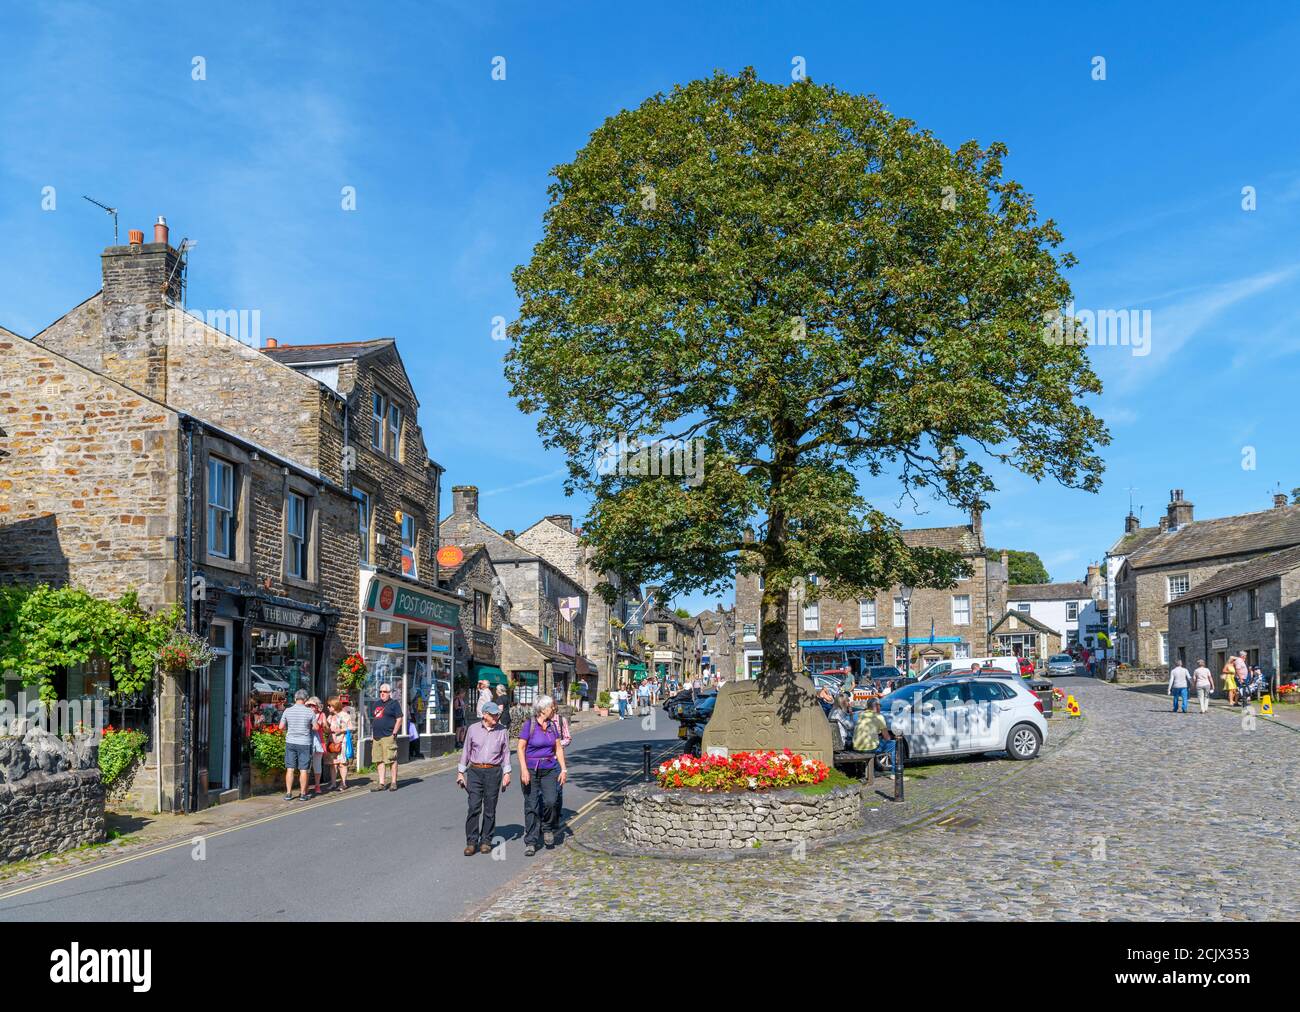 The Square and main Street dans le village anglais traditionnel de Grassington, Yorkshire Dales National Park, North Yorkshire, Angleterre, Royaume-Uni. Banque D'Images